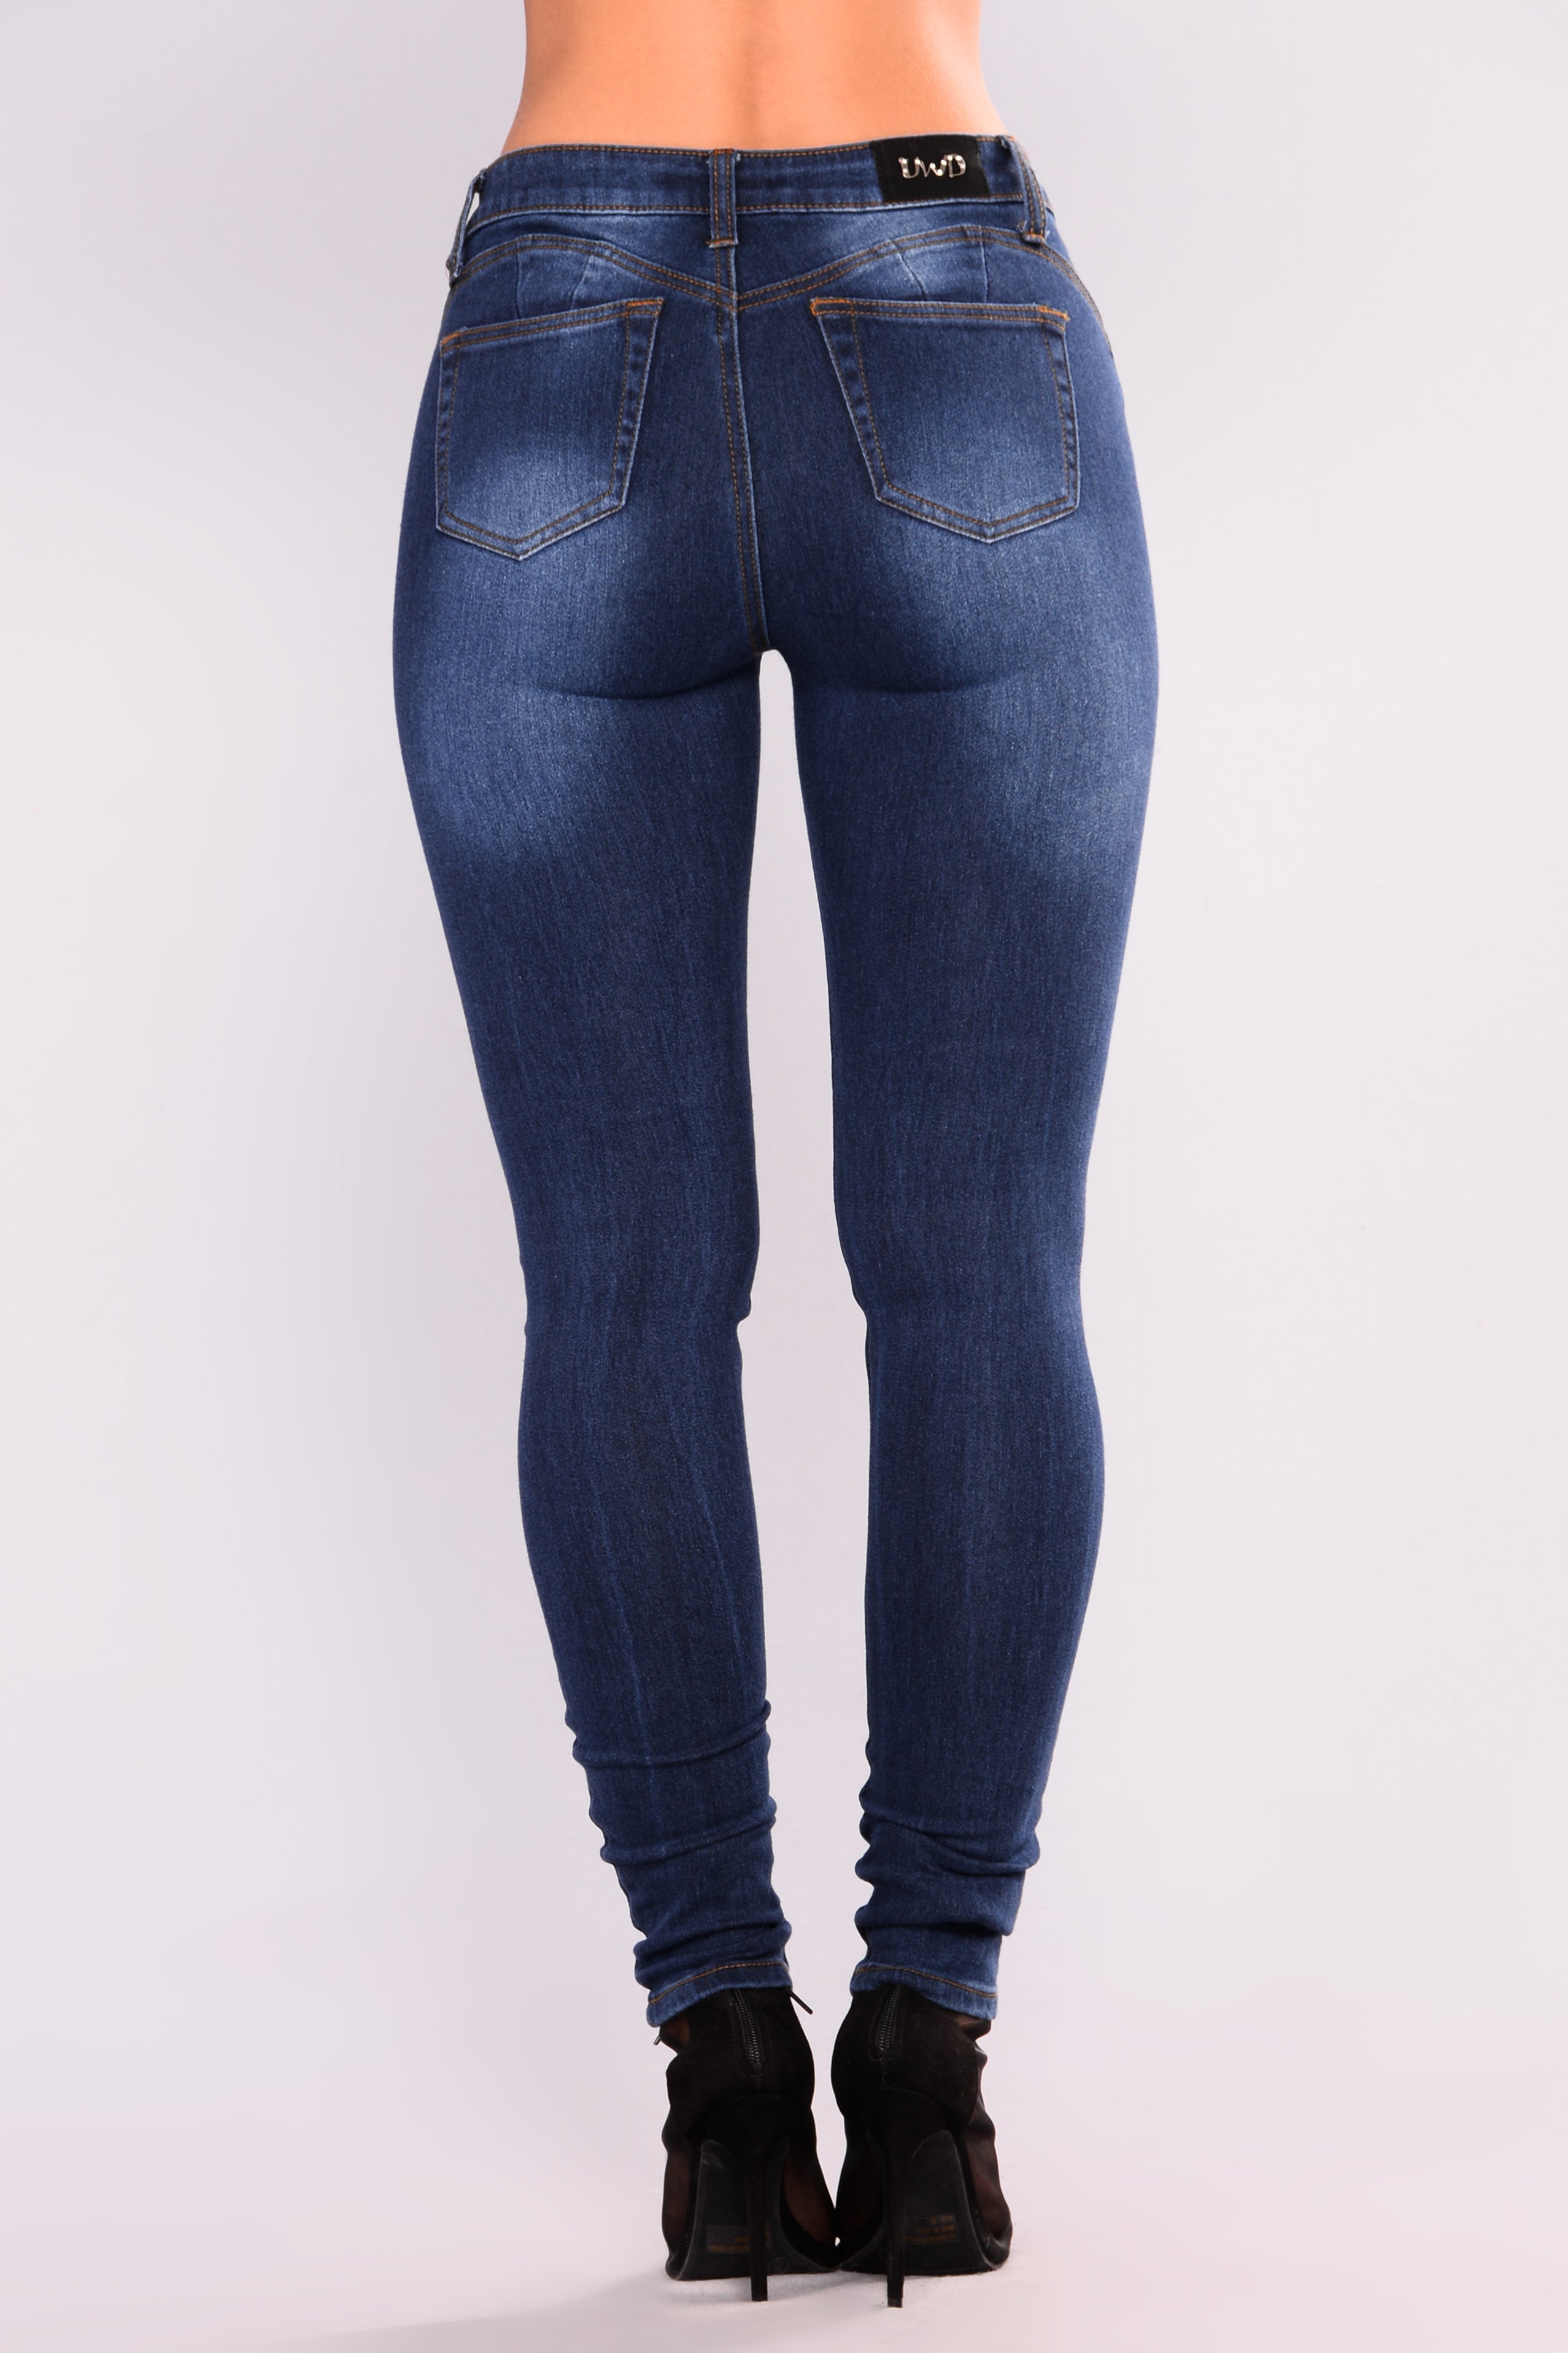 fashion nova jeans for skinny girl